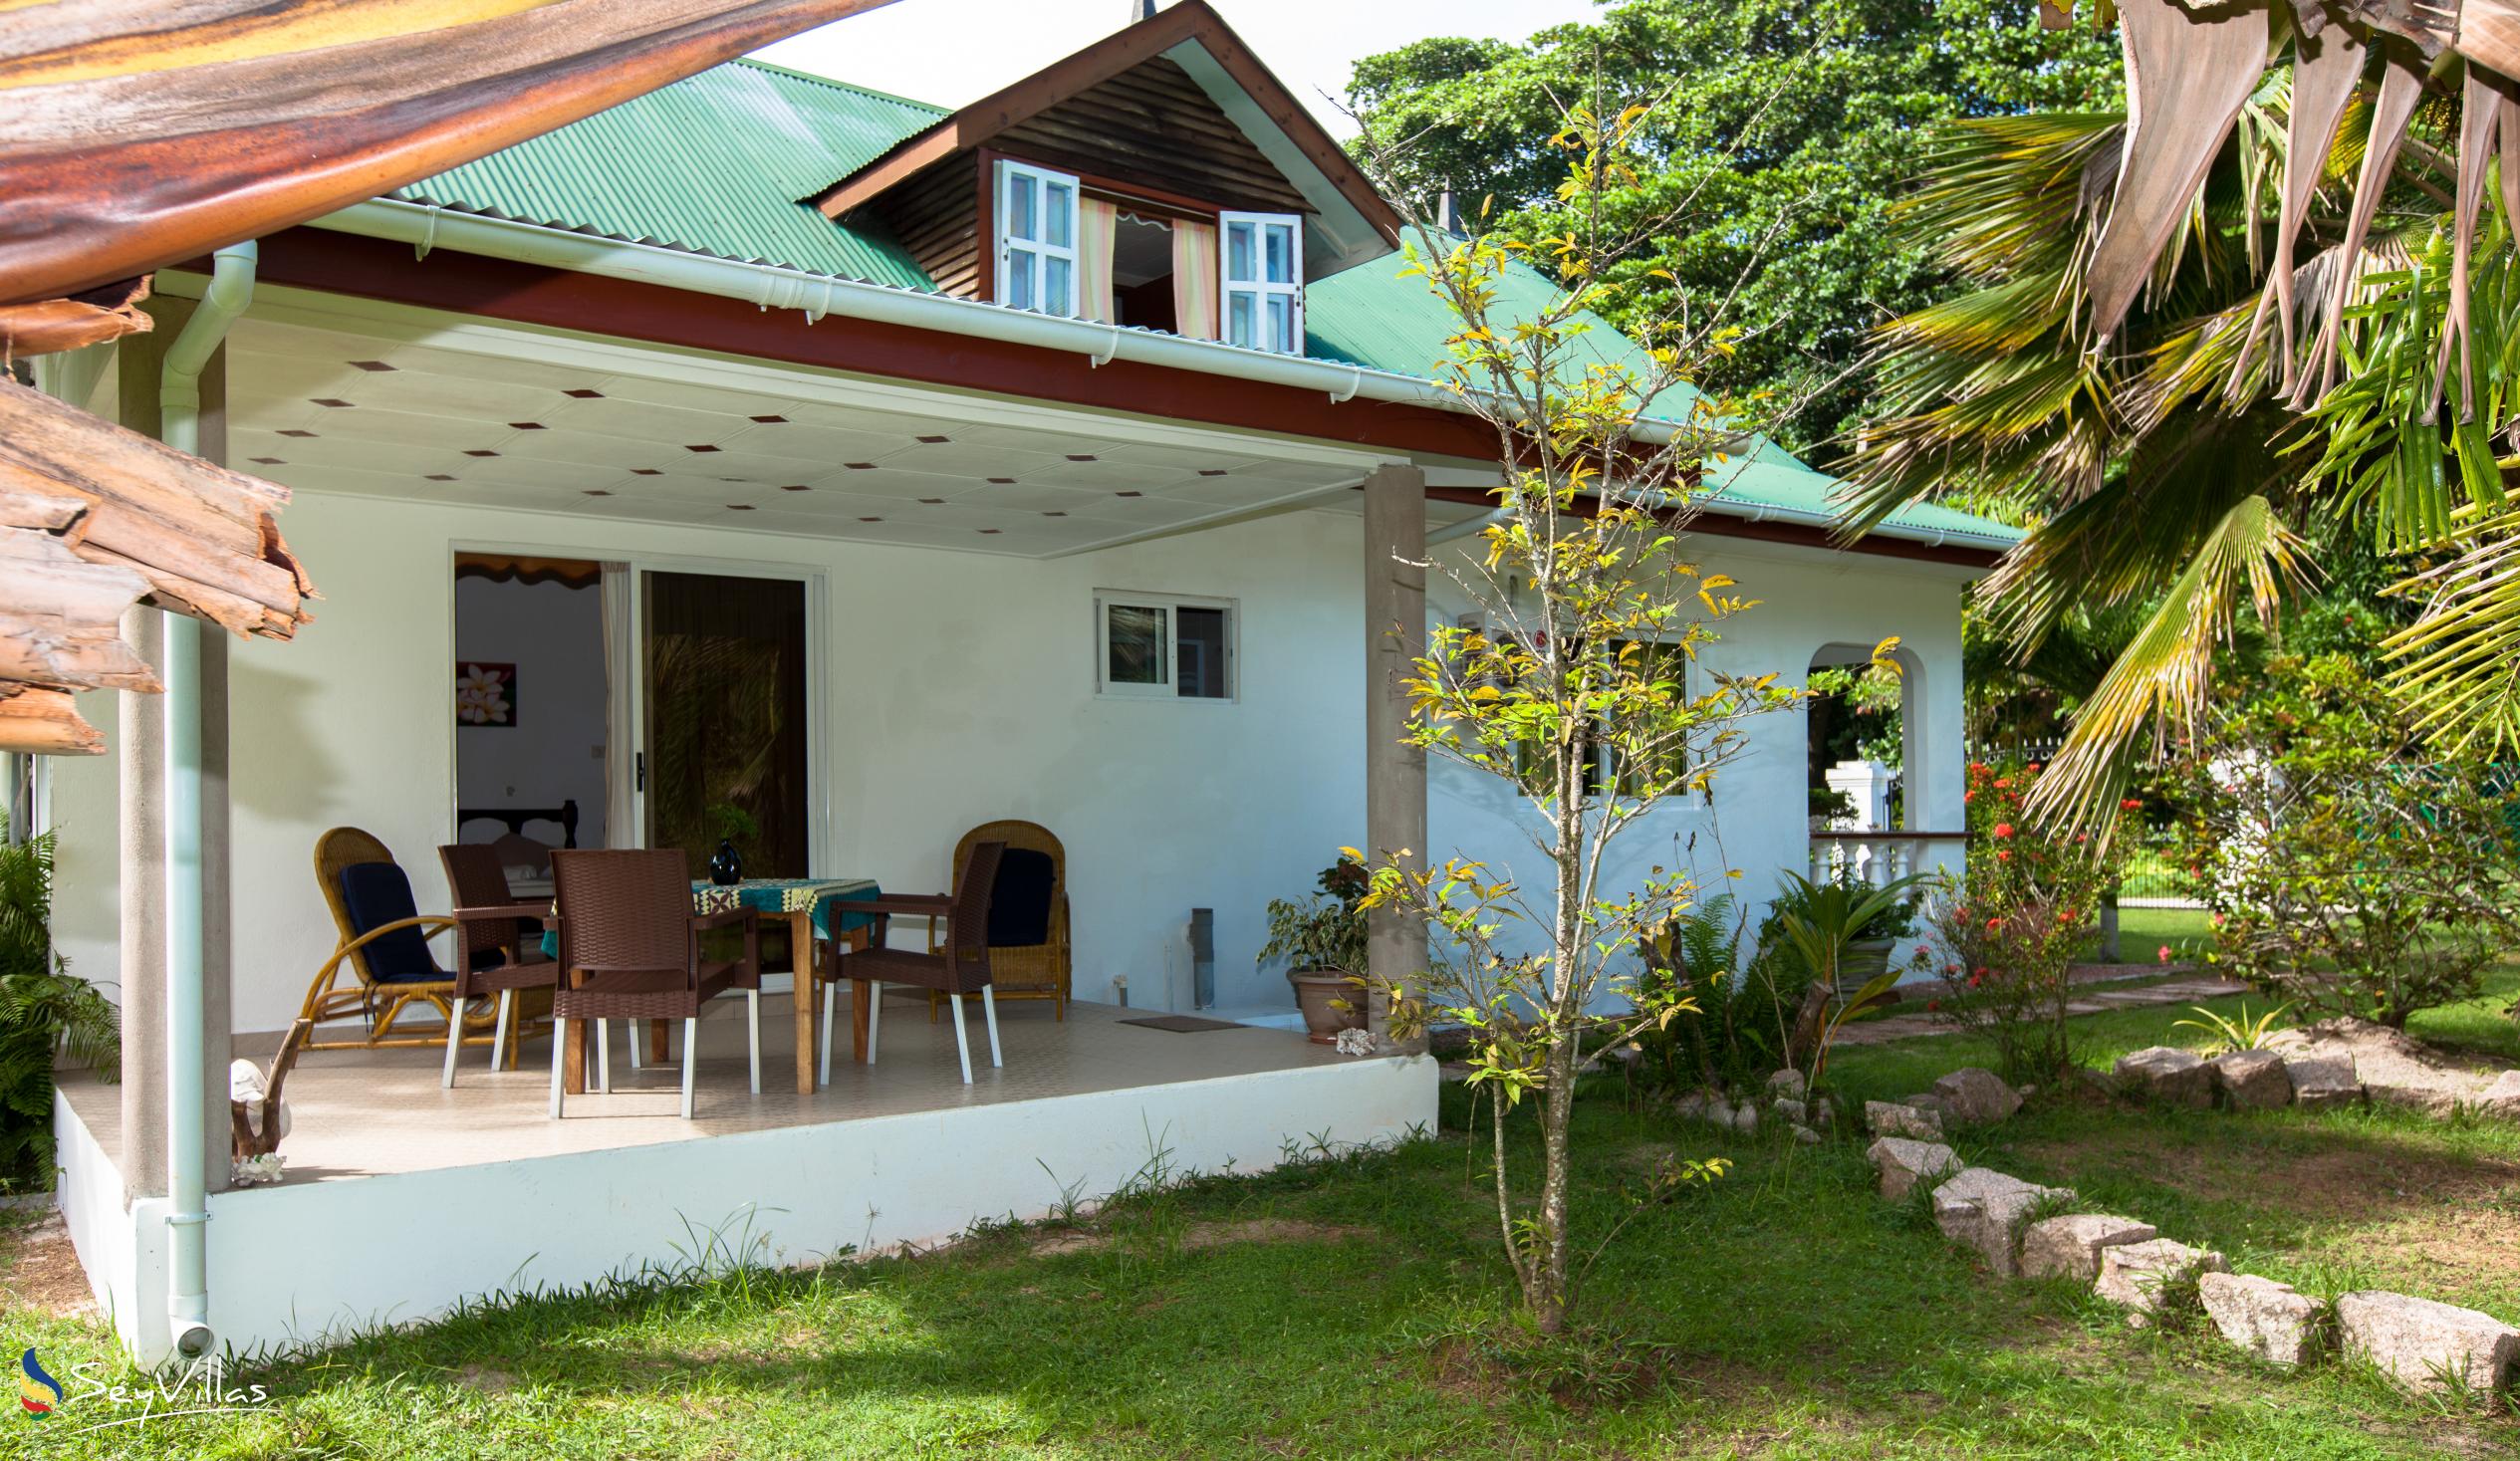 Photo 59: Pension Fidele - Outdoor area - La Digue (Seychelles)